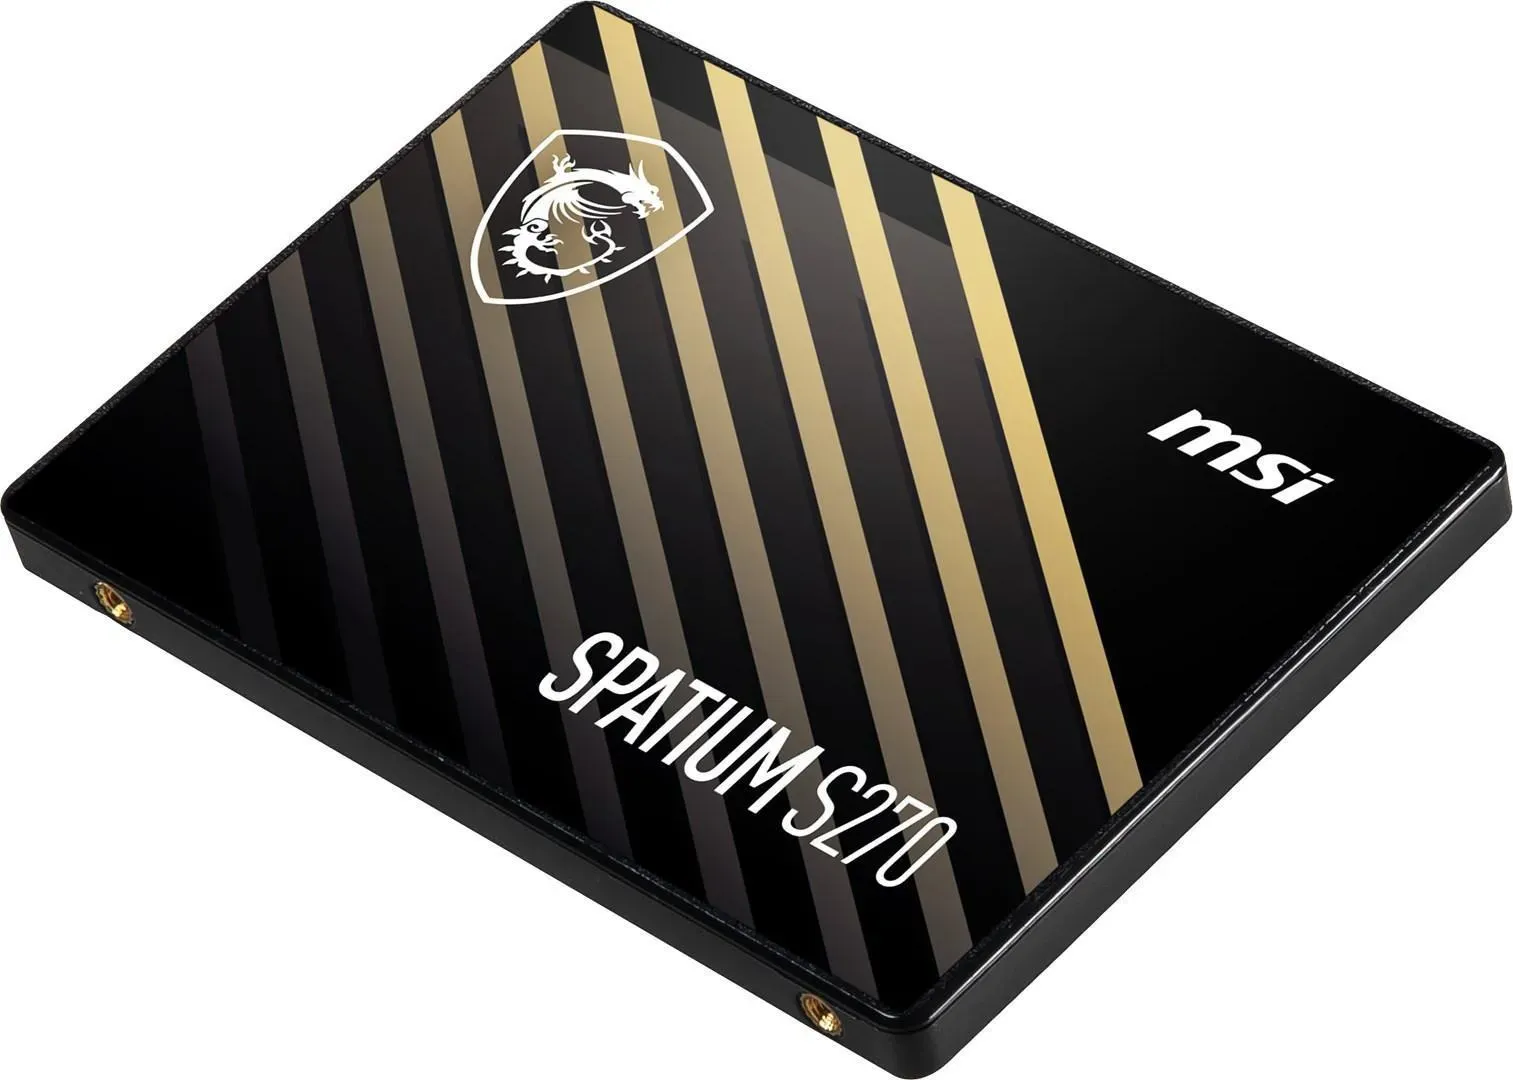 MSI SSD SPATIUM S270 SATA 480GB (SPATIUM S270 SATA 2.5 480GB)